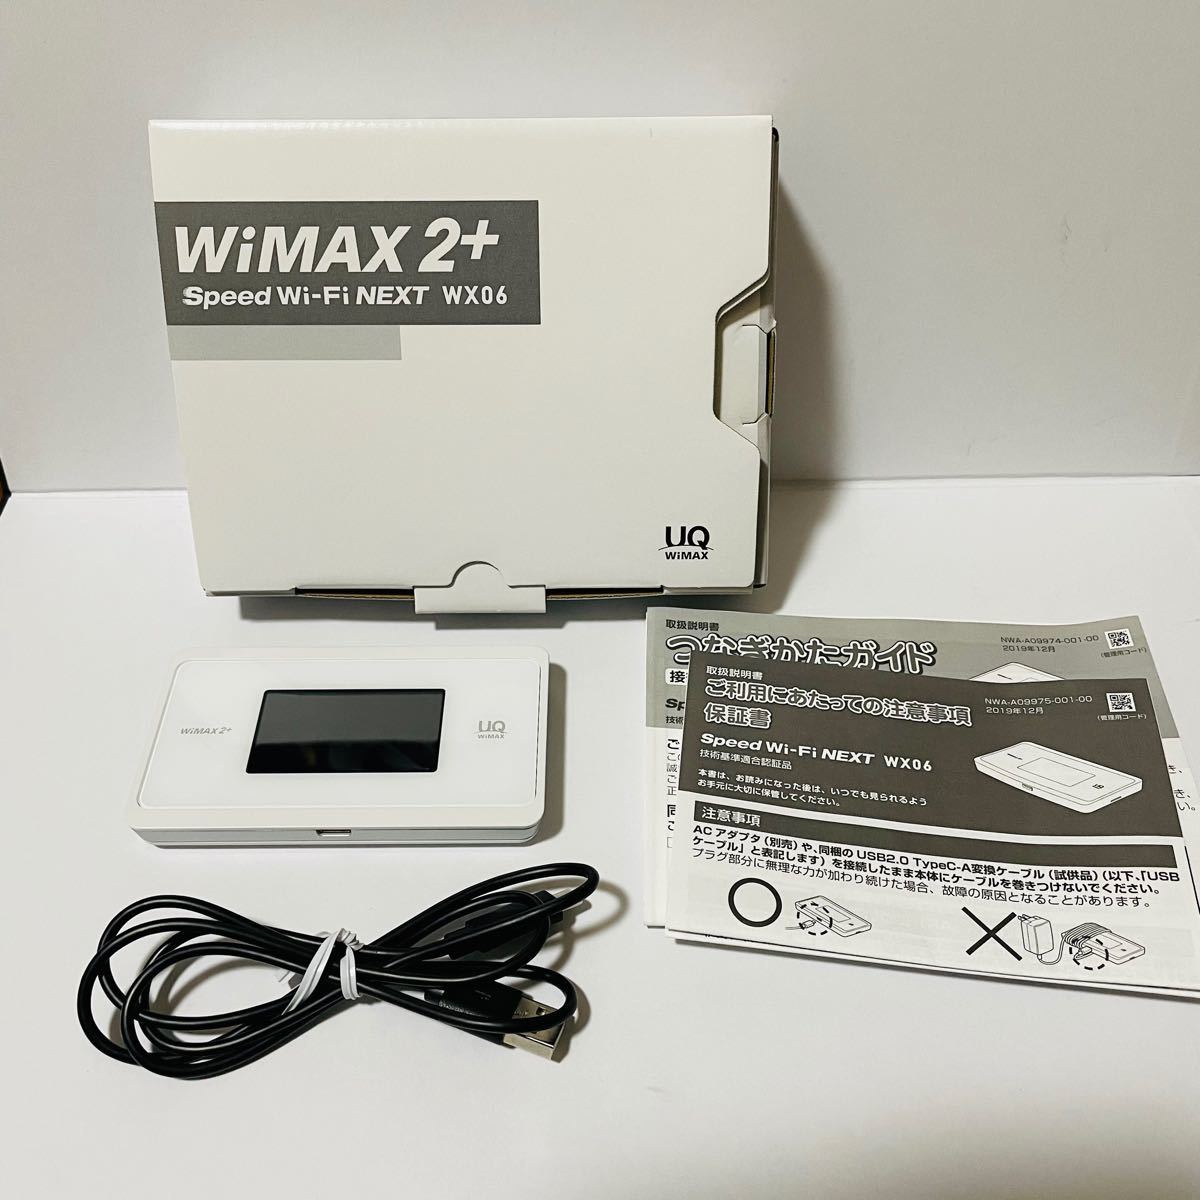 Wimax 2+ speed Wi-Fi next WX06